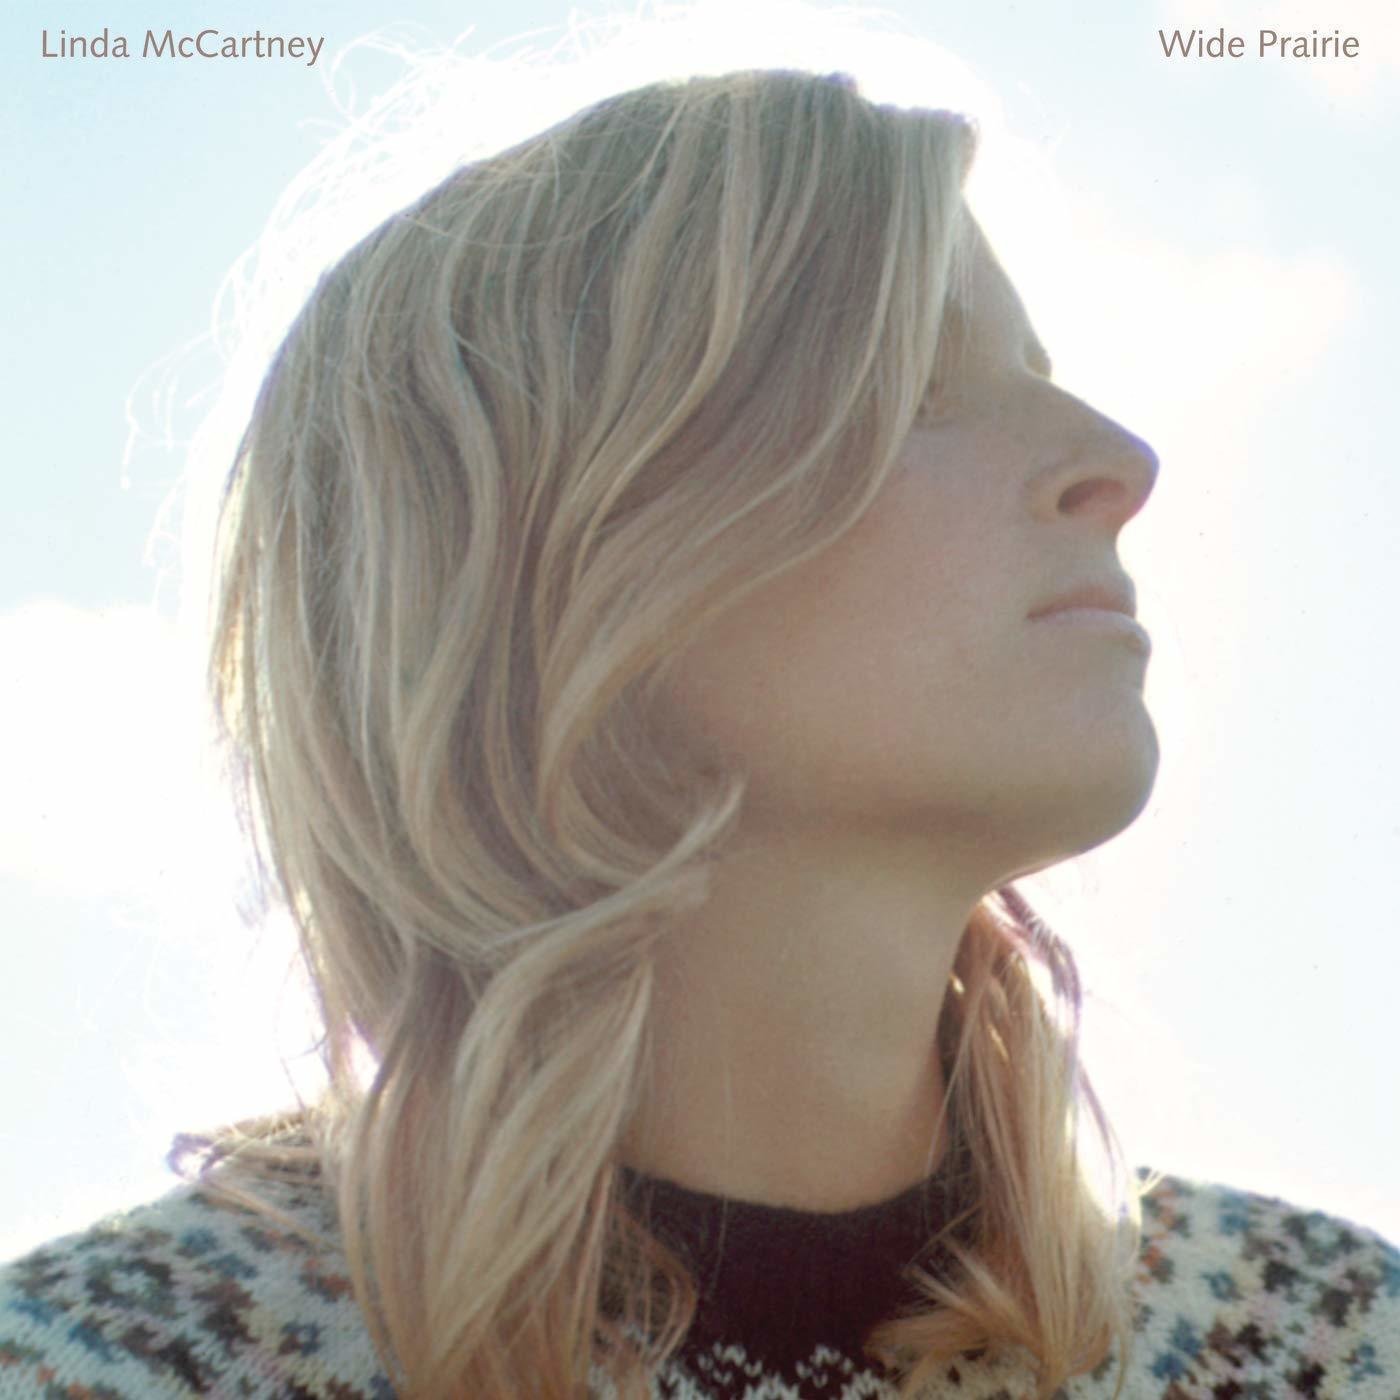 Vinyl Record Linda McCartney - Wide Prairie (LP)